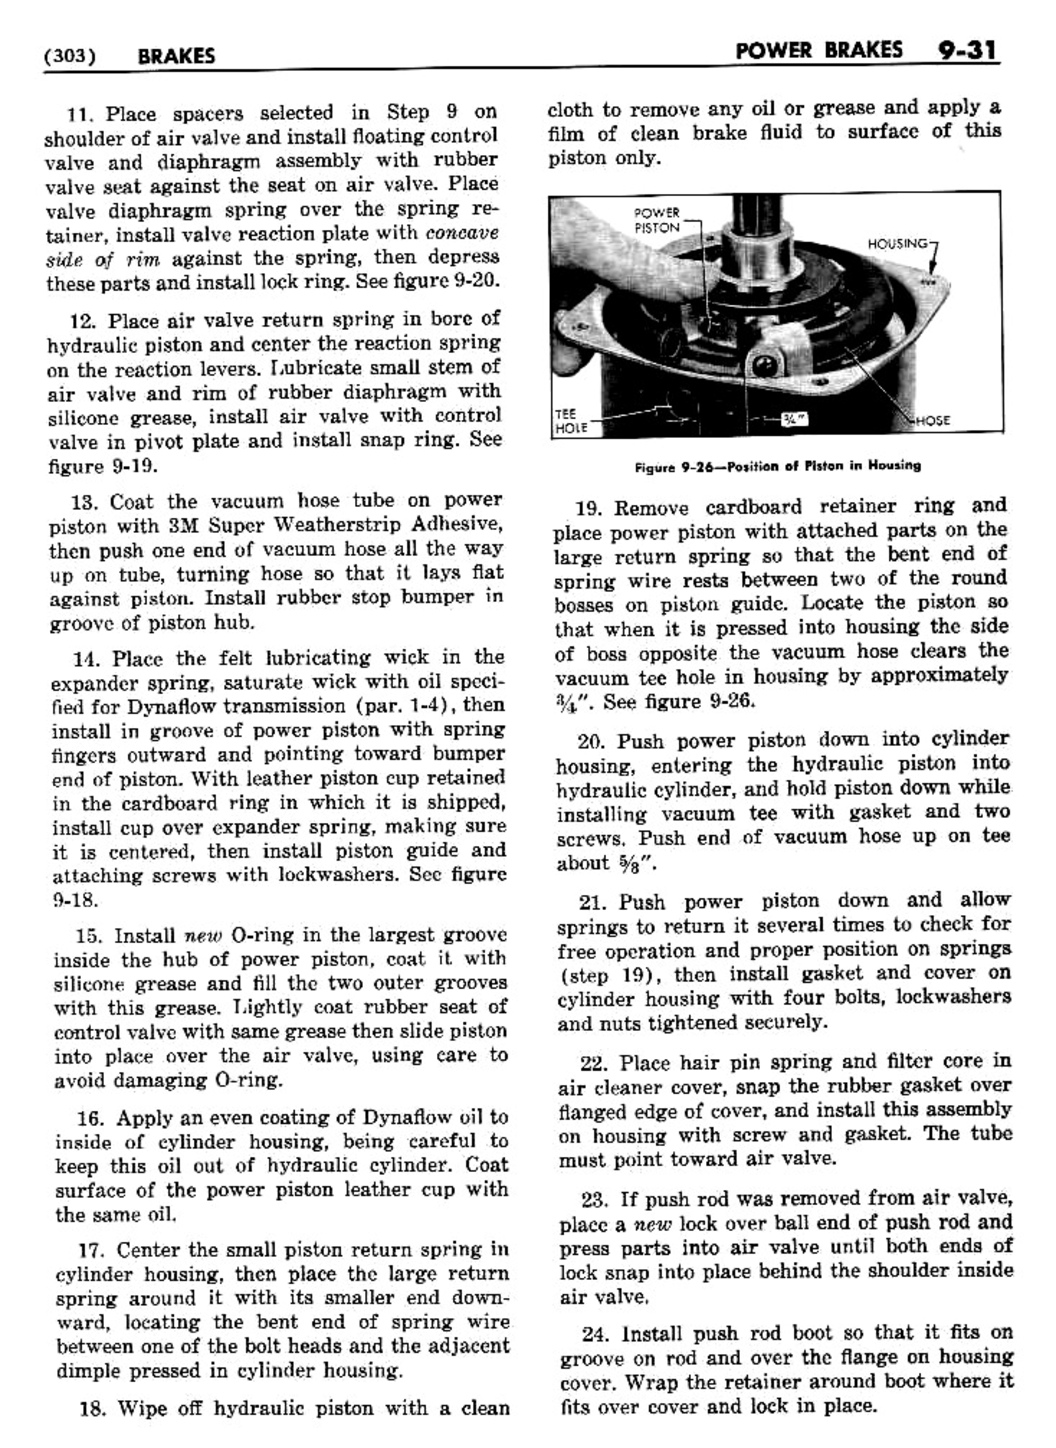 n_10 1955 Buick Shop Manual - Brakes-031-031.jpg